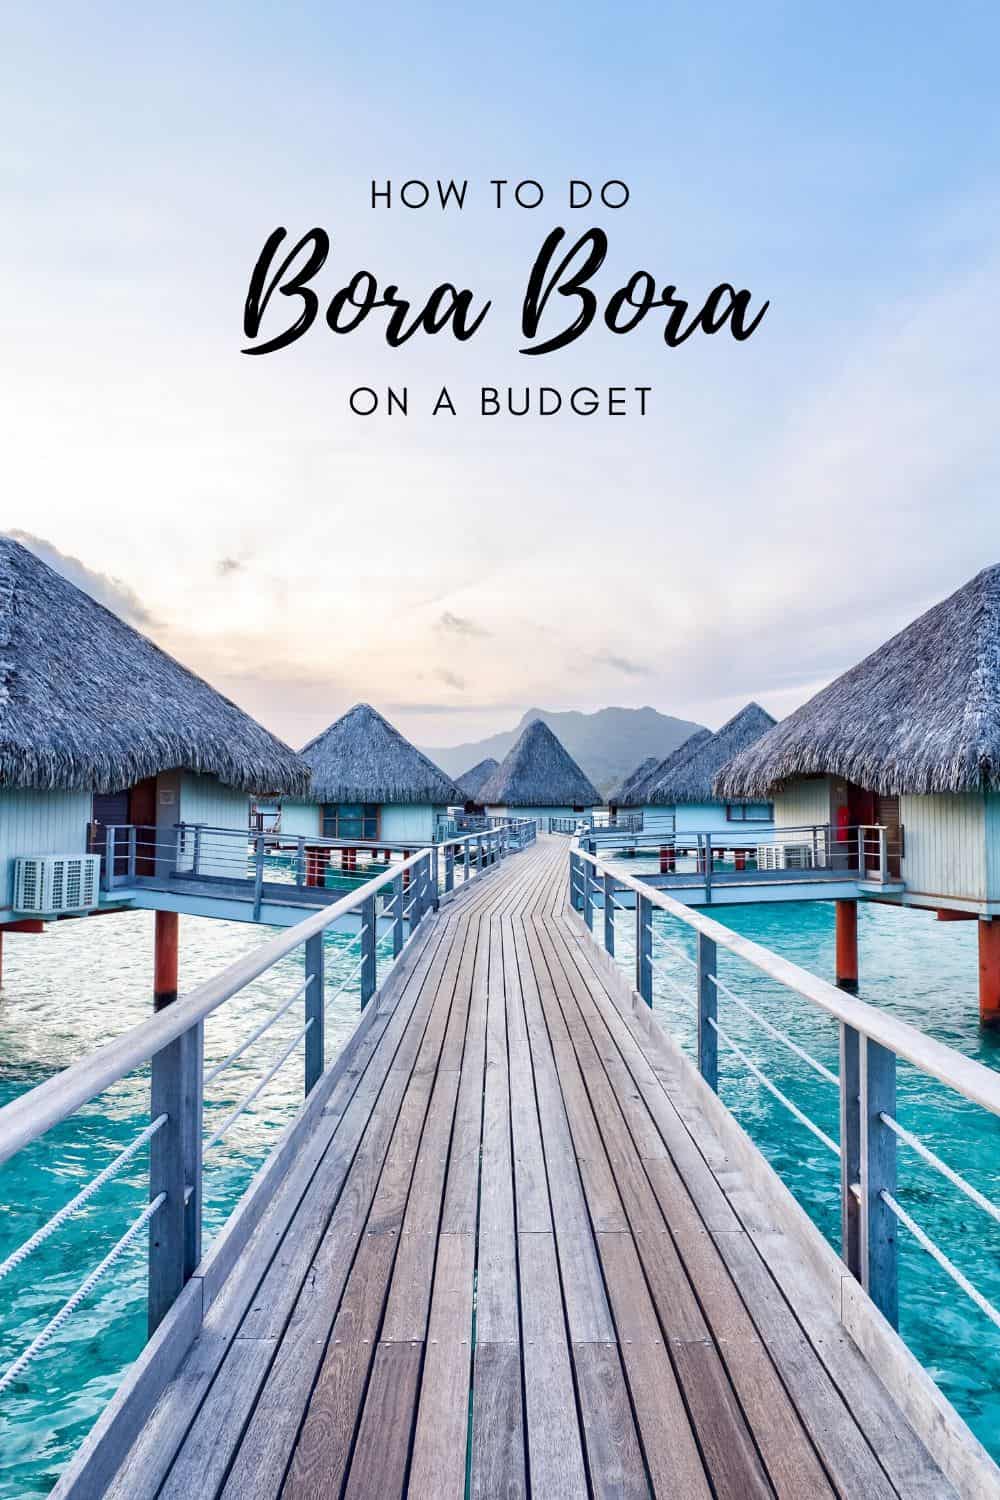 How to Travel Bora Bora on a Budget - Tips to keep Bora Bora trip costs low